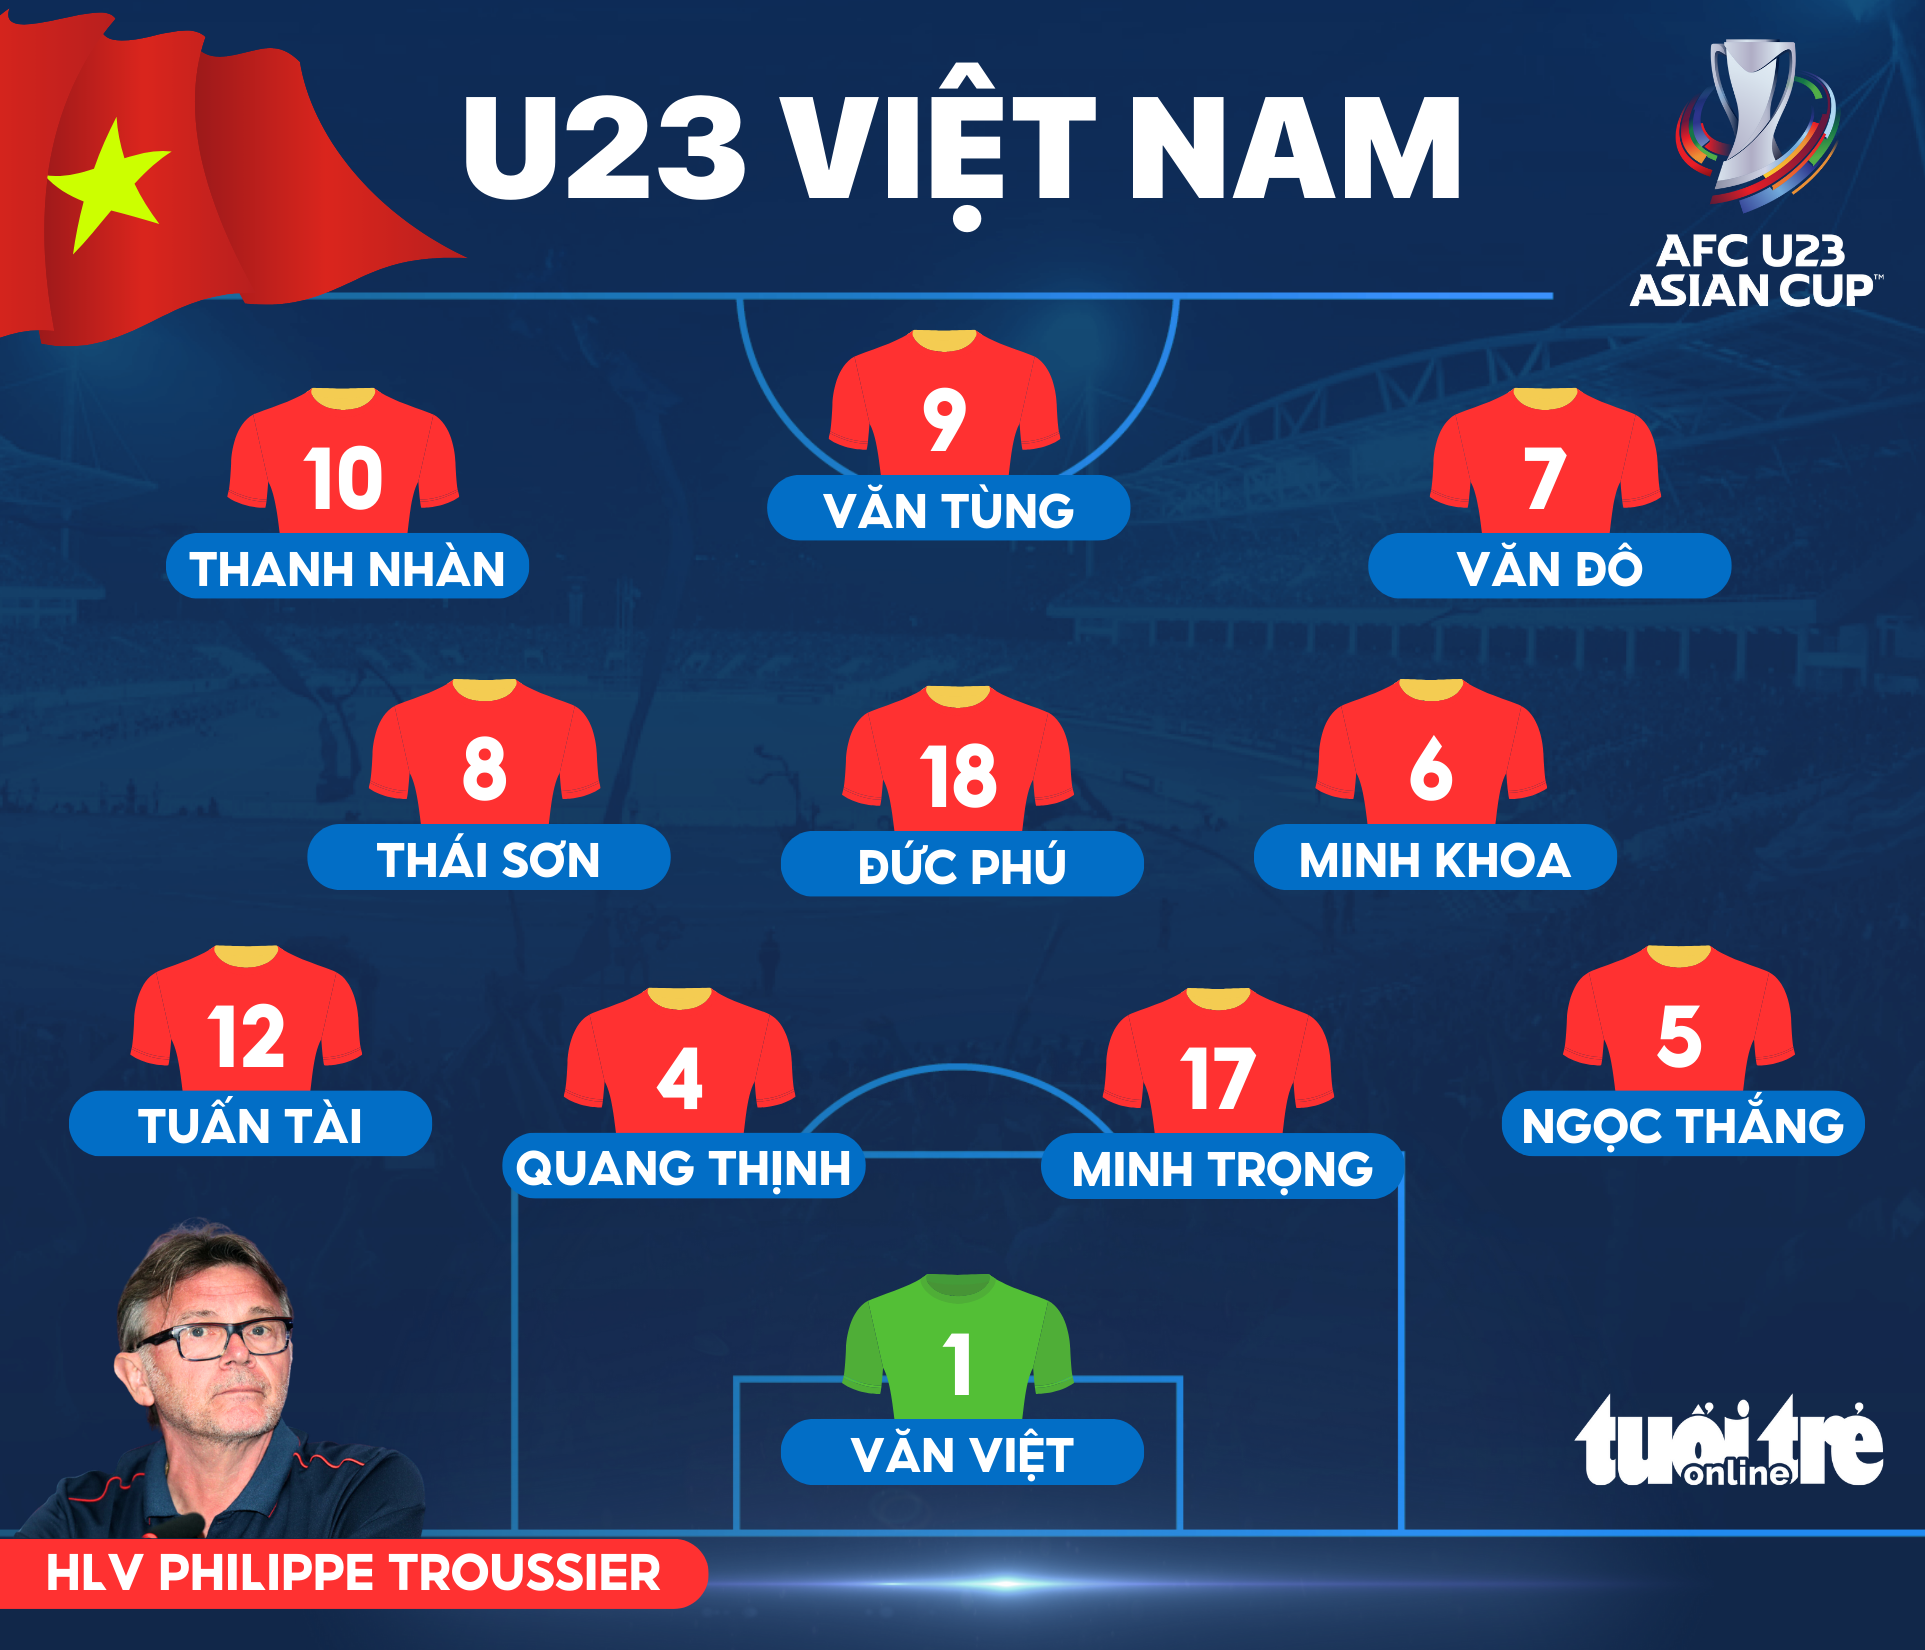 Thắng U23 Guam 6-0, U23 Việt Nam tạm dẫn đầu bảng C - Ảnh 3.